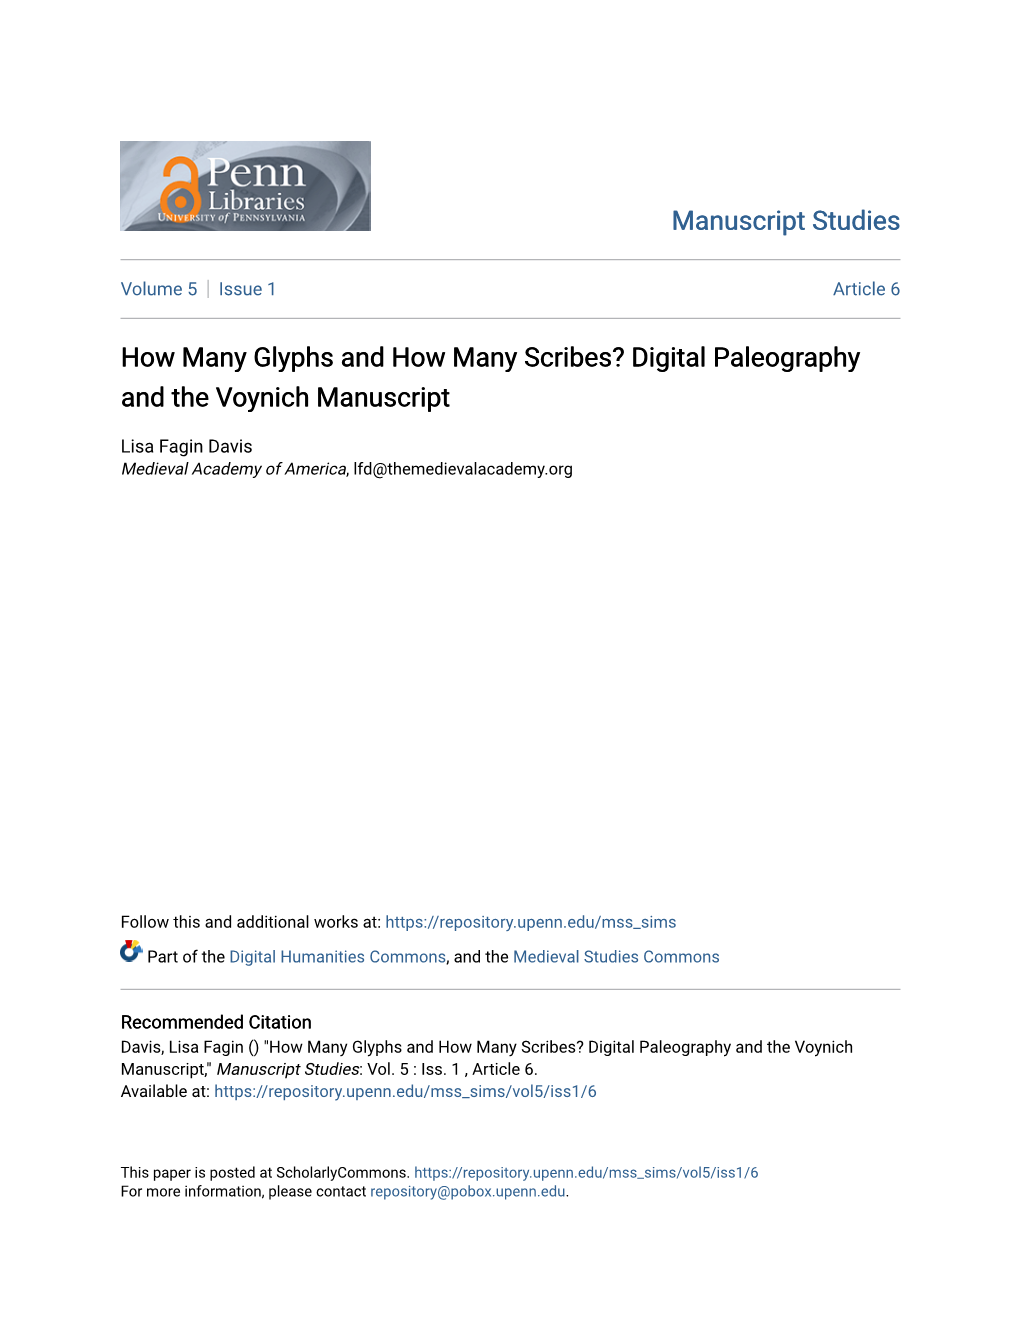 Digital Paleography and the Voynich Manuscript